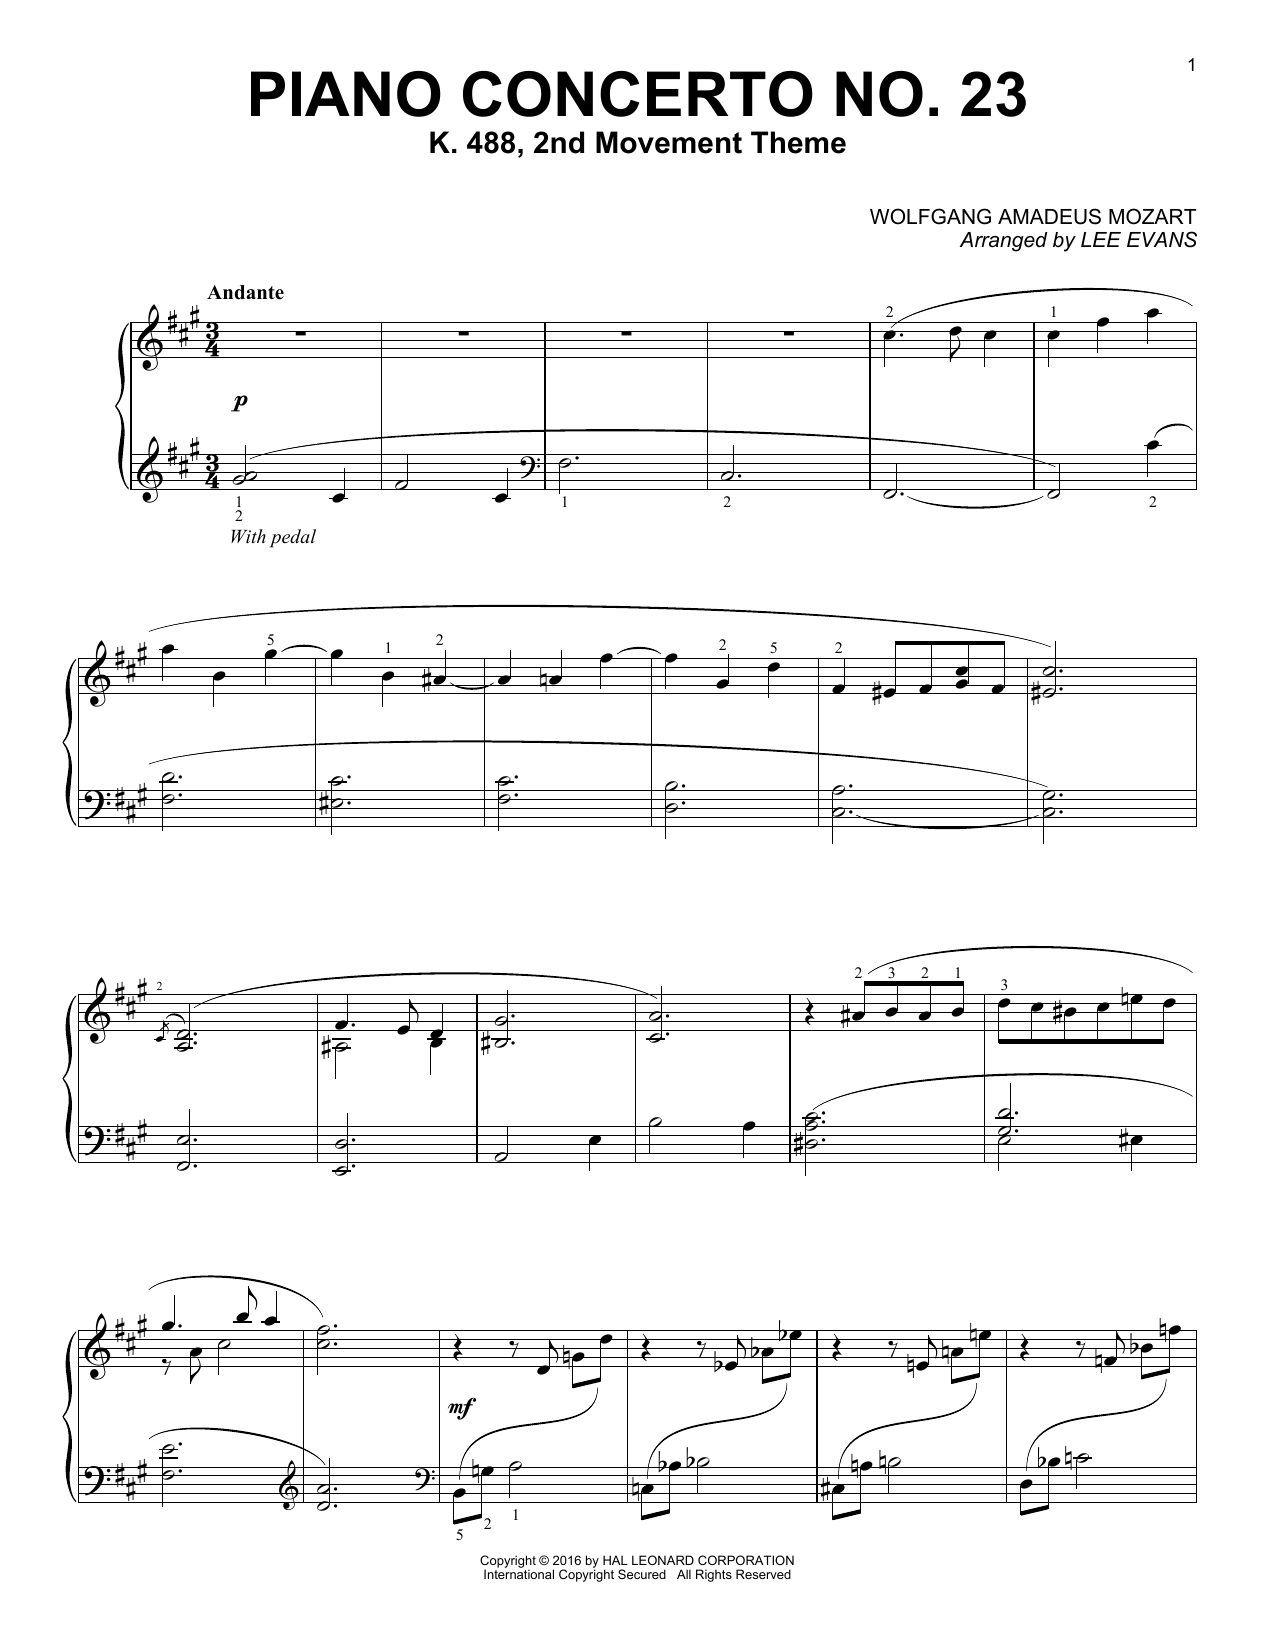 Download Wolfgang Amadeus Mozart Piano Concerto No.23 in A Major, K.488, Sheet Music